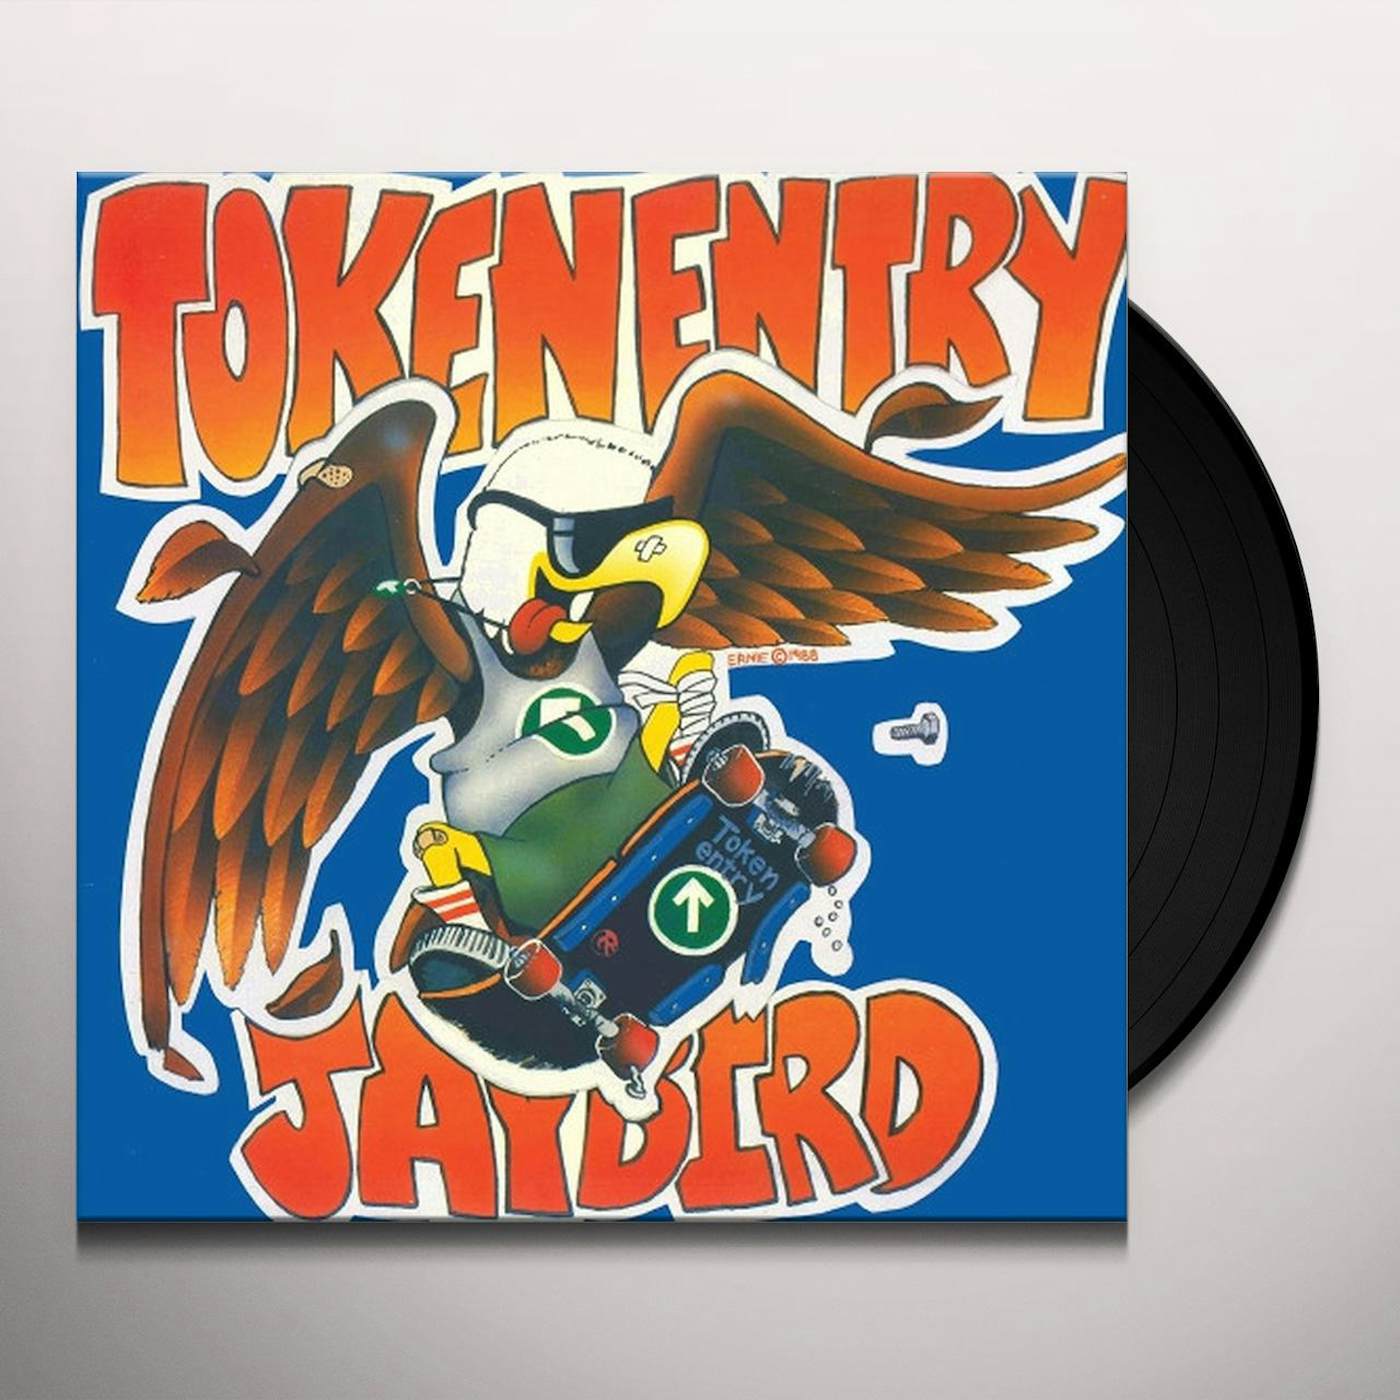 Token Entry Jaybird Vinyl Record